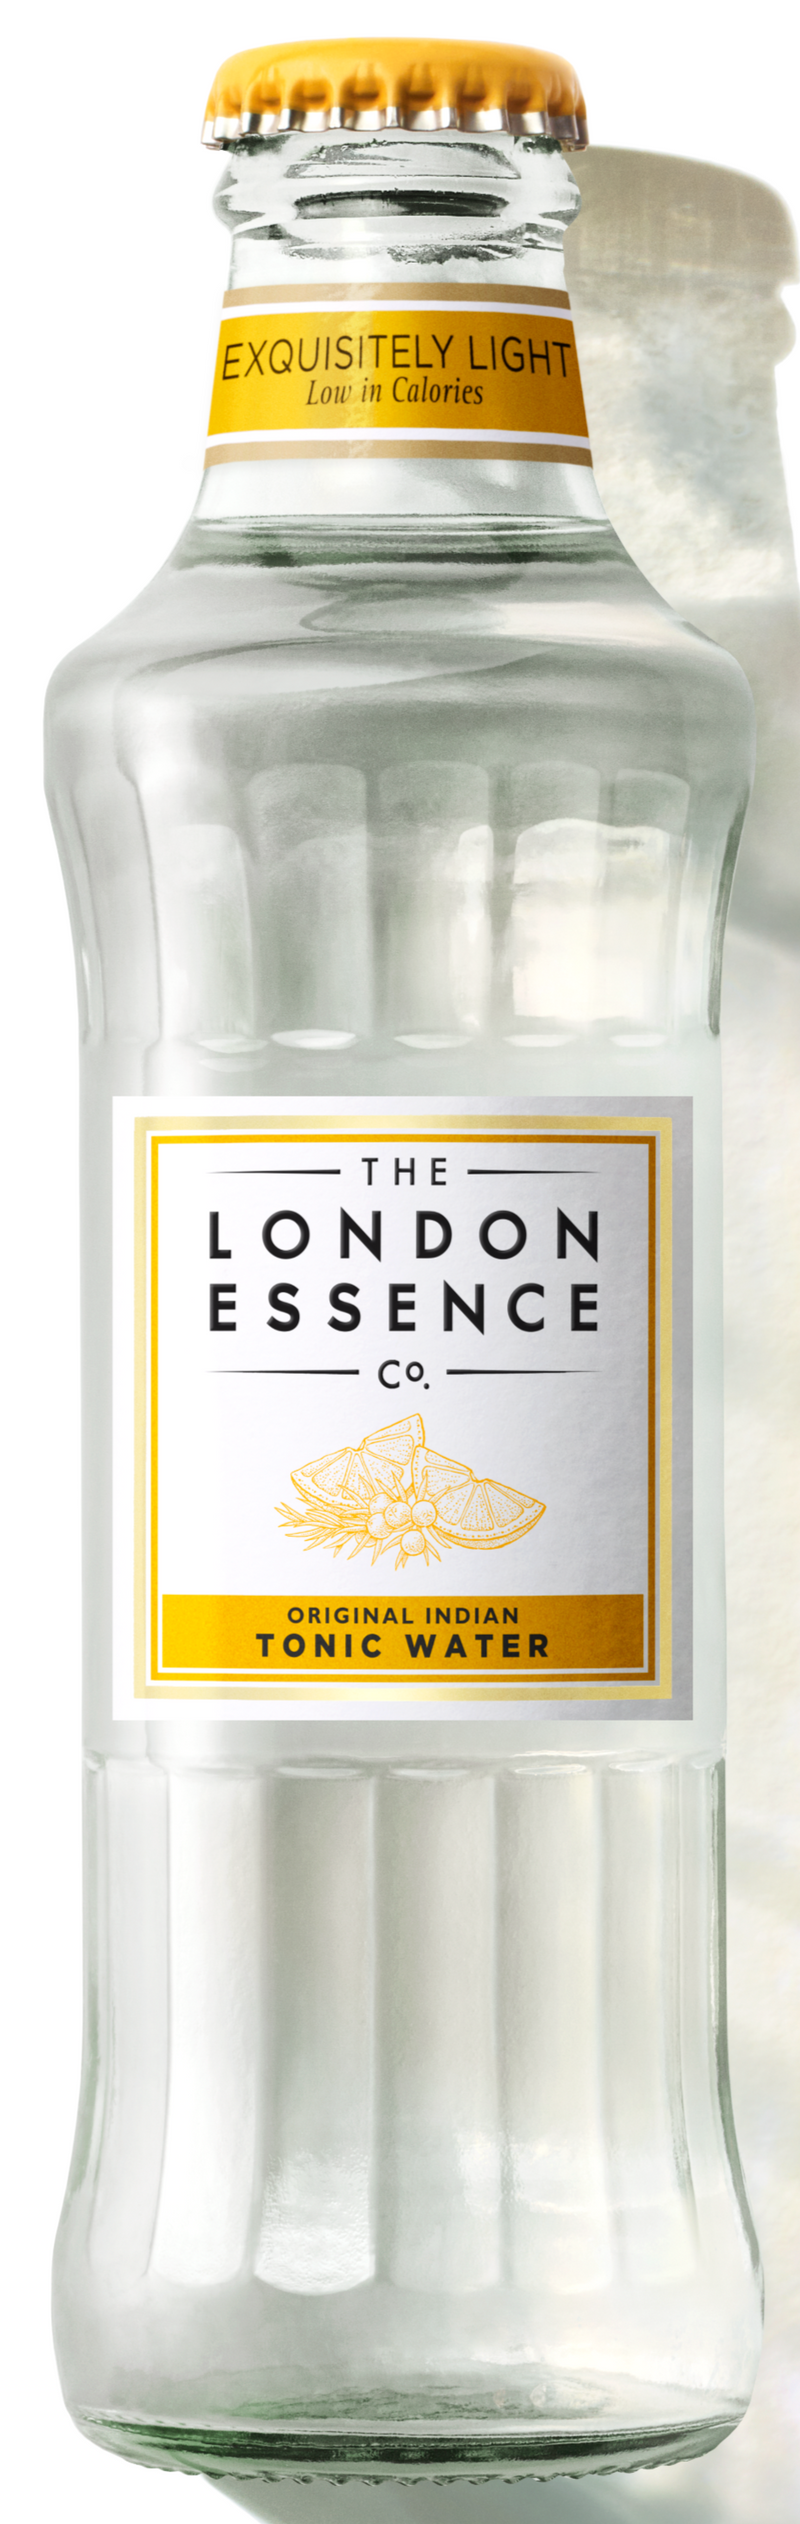 London Essence Tonic Water 24x200ml